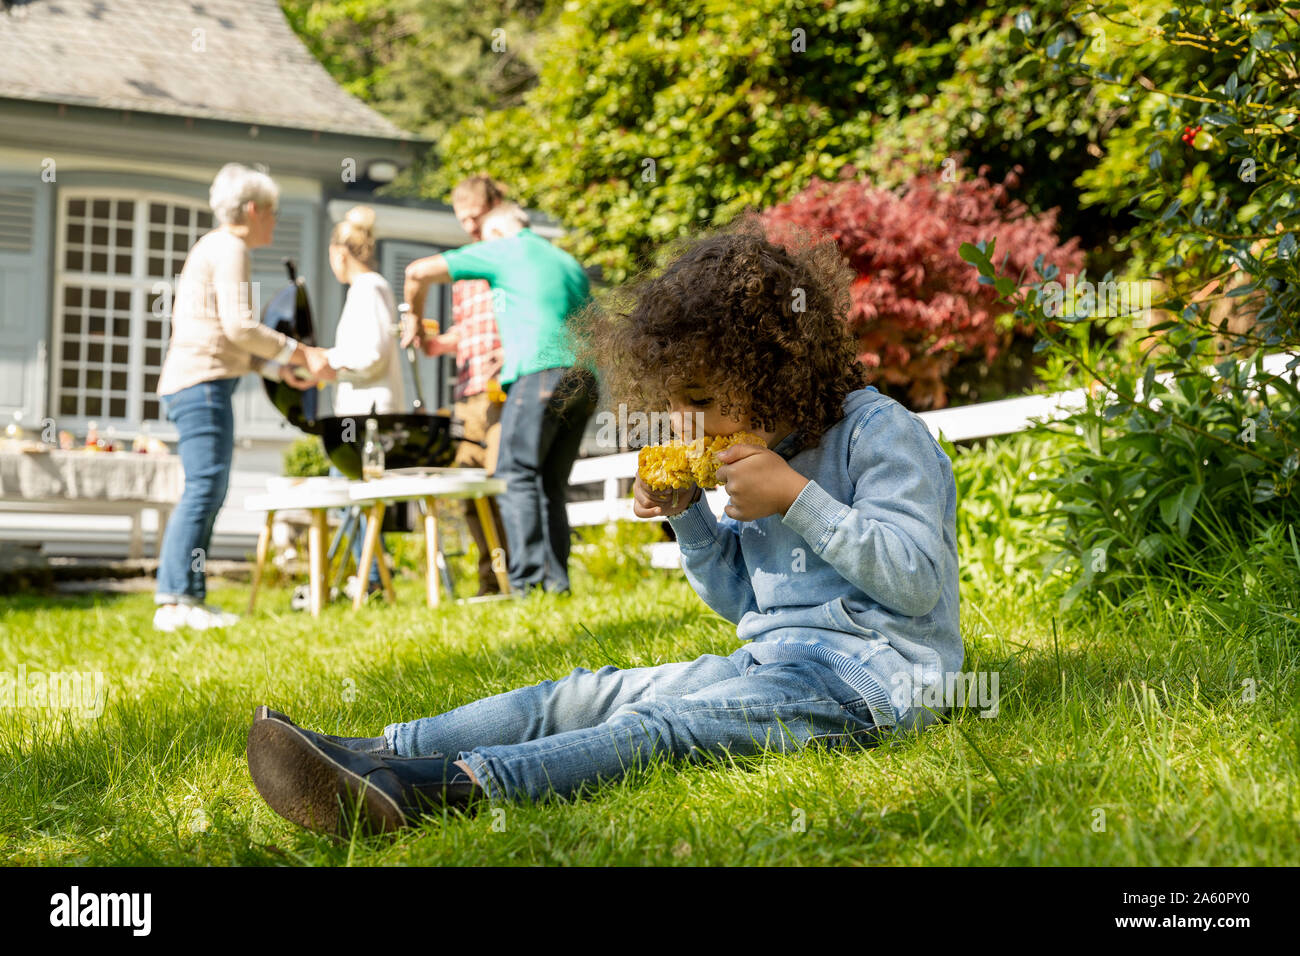 Boy eating a corn cob on a family barbecue in garden Stock Photo